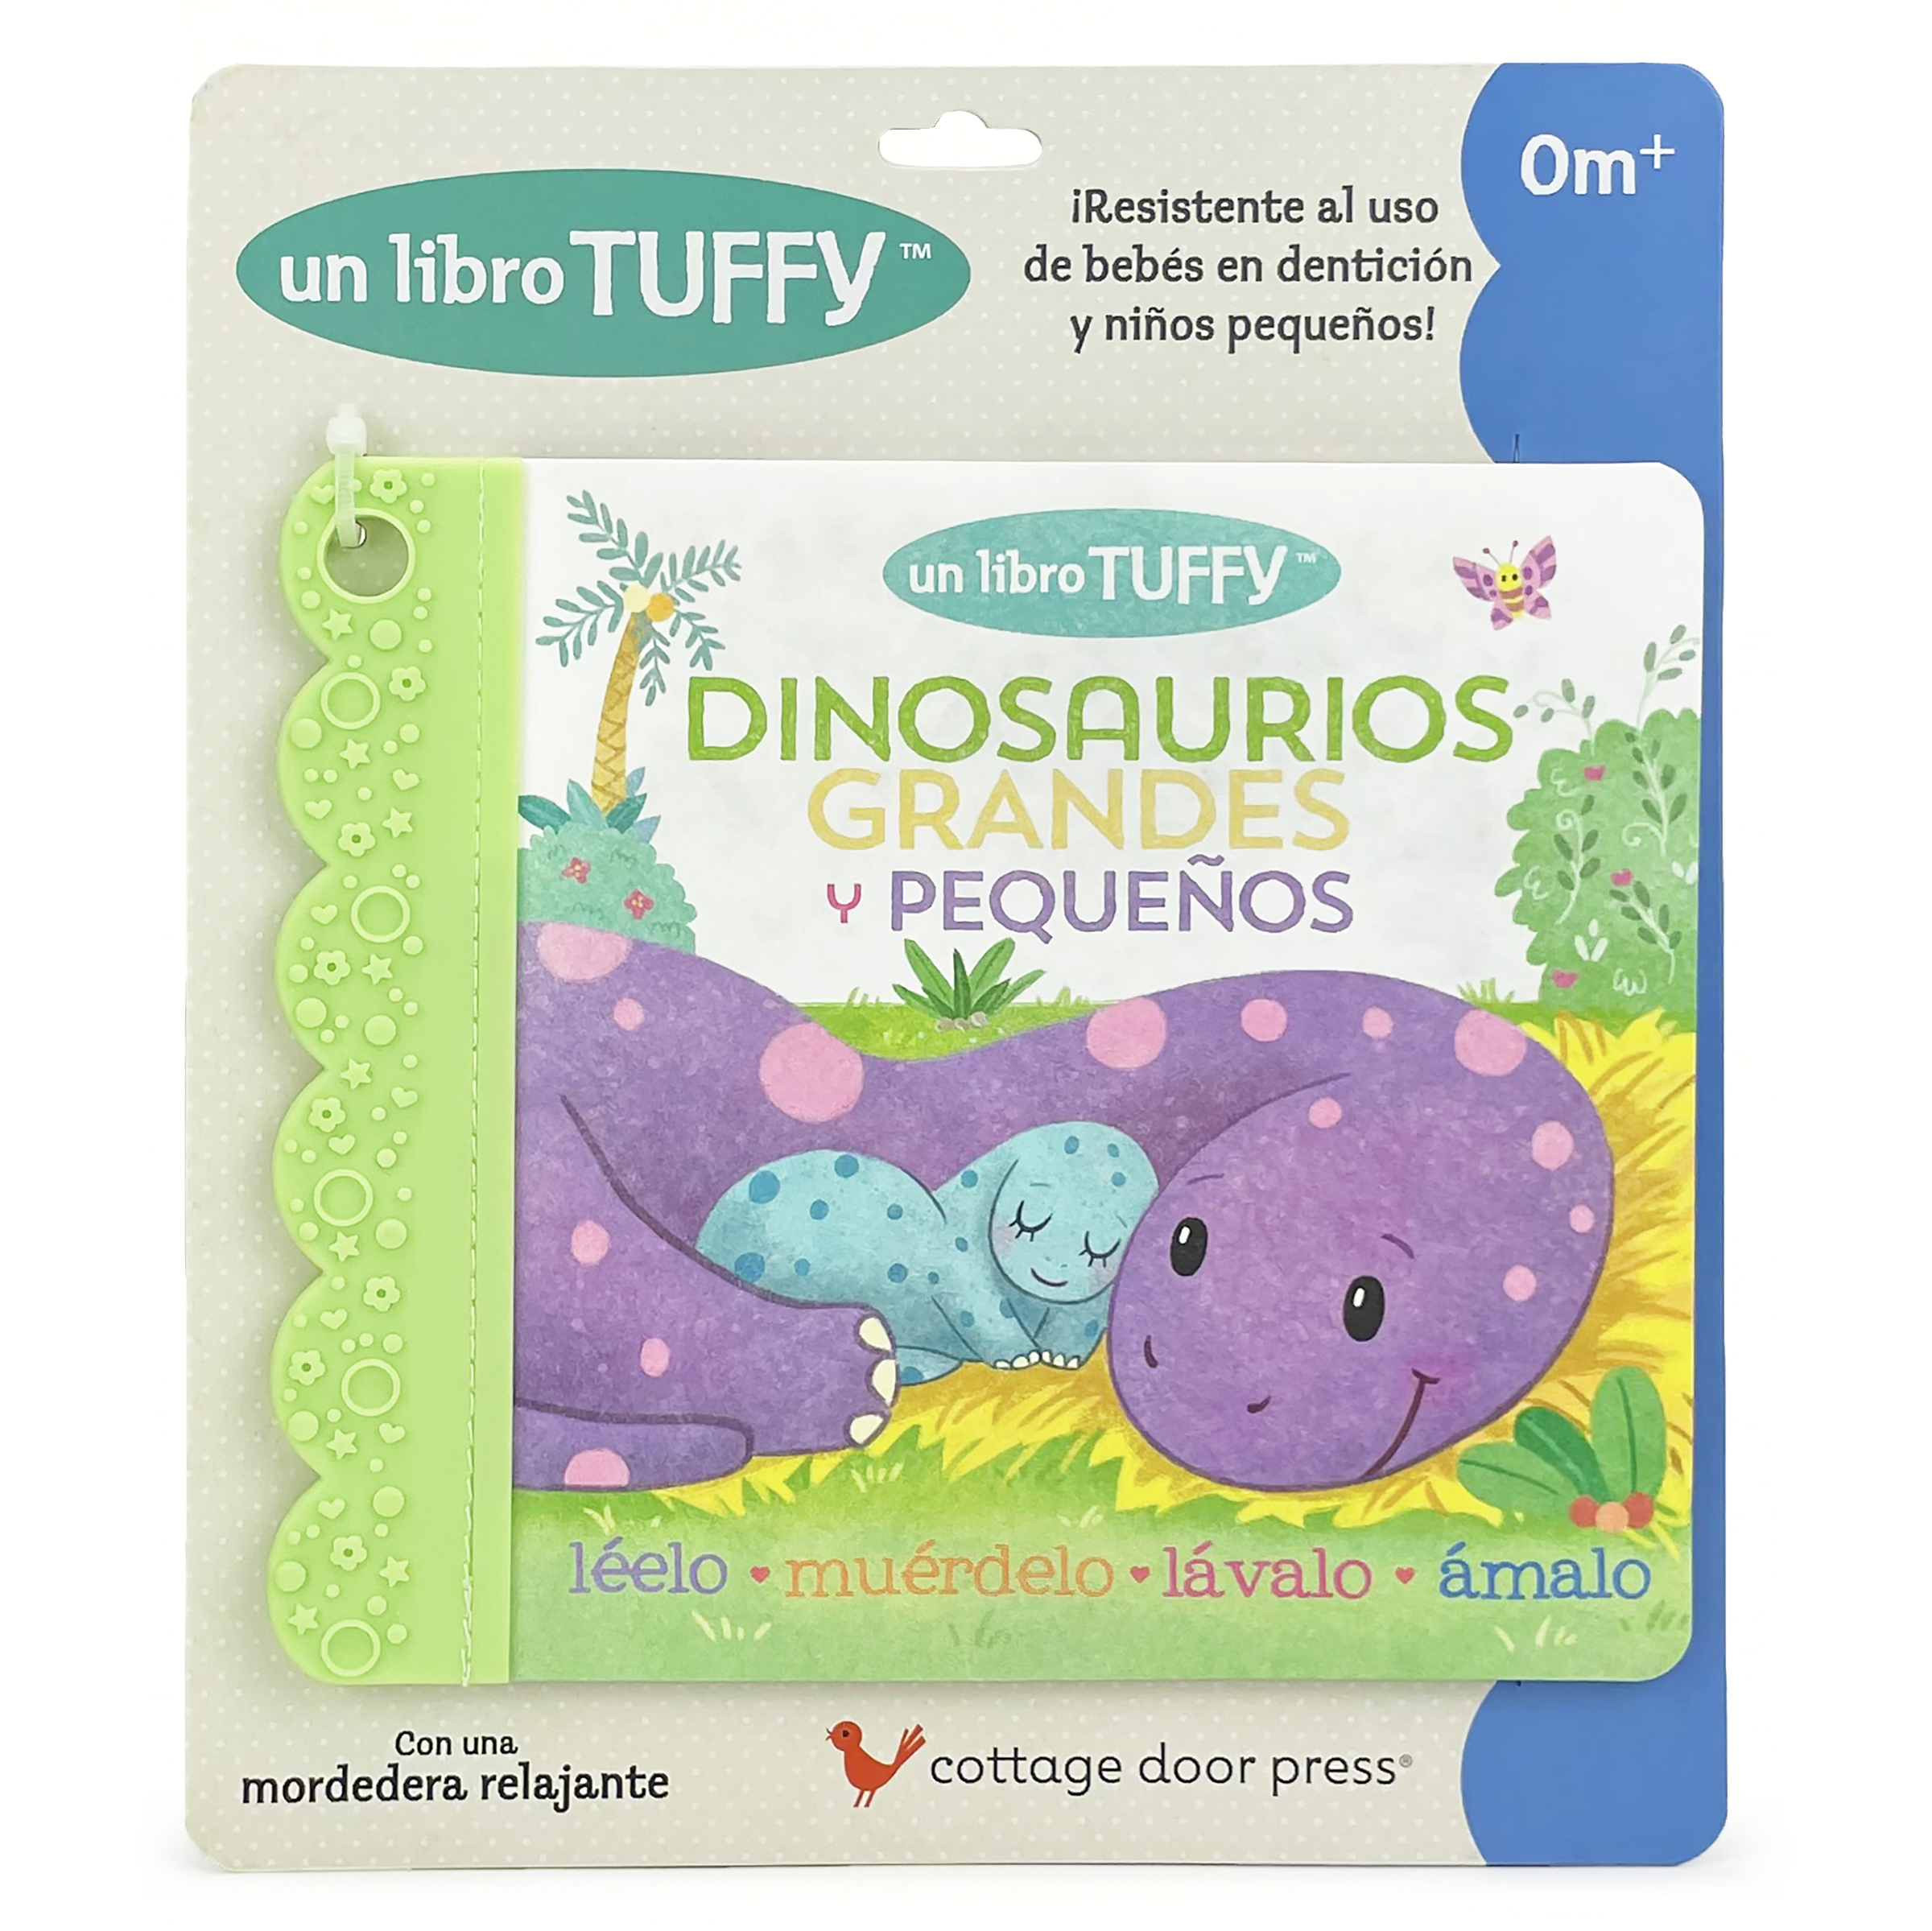 Dinosaurios Grandes y Pequenos / Dinosaurs Big & Little (Spanish Edition) (A Tuffy Book)